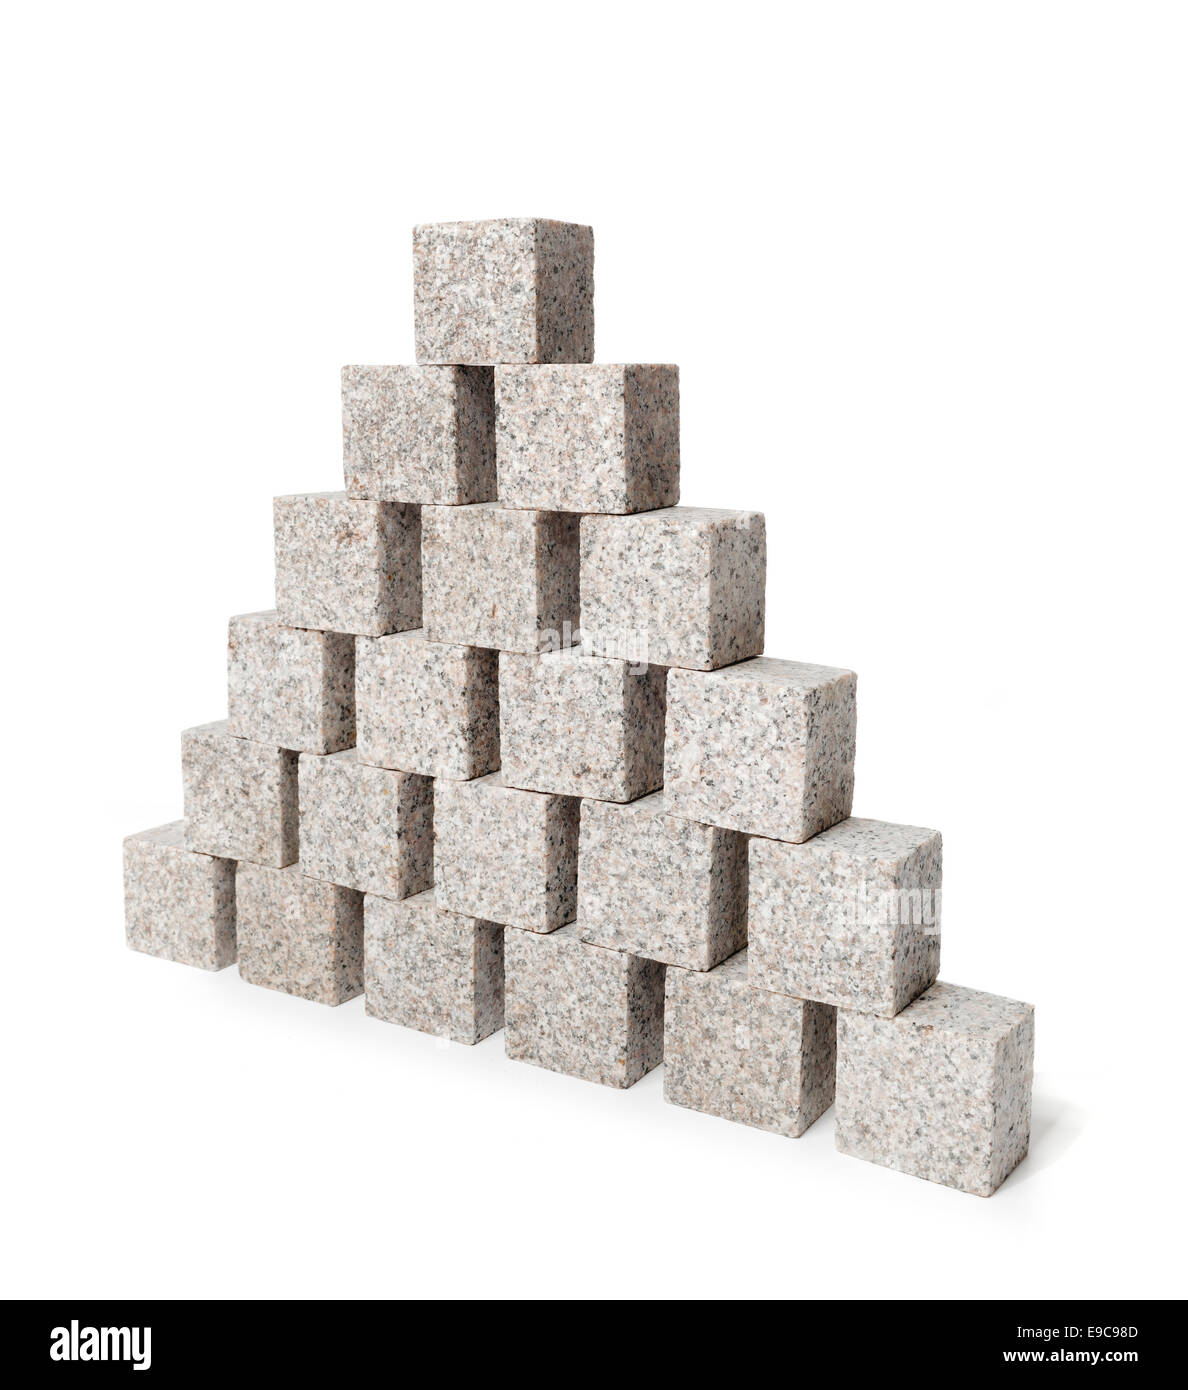 Pyramid made of small granite rock blocks. Stock Photo